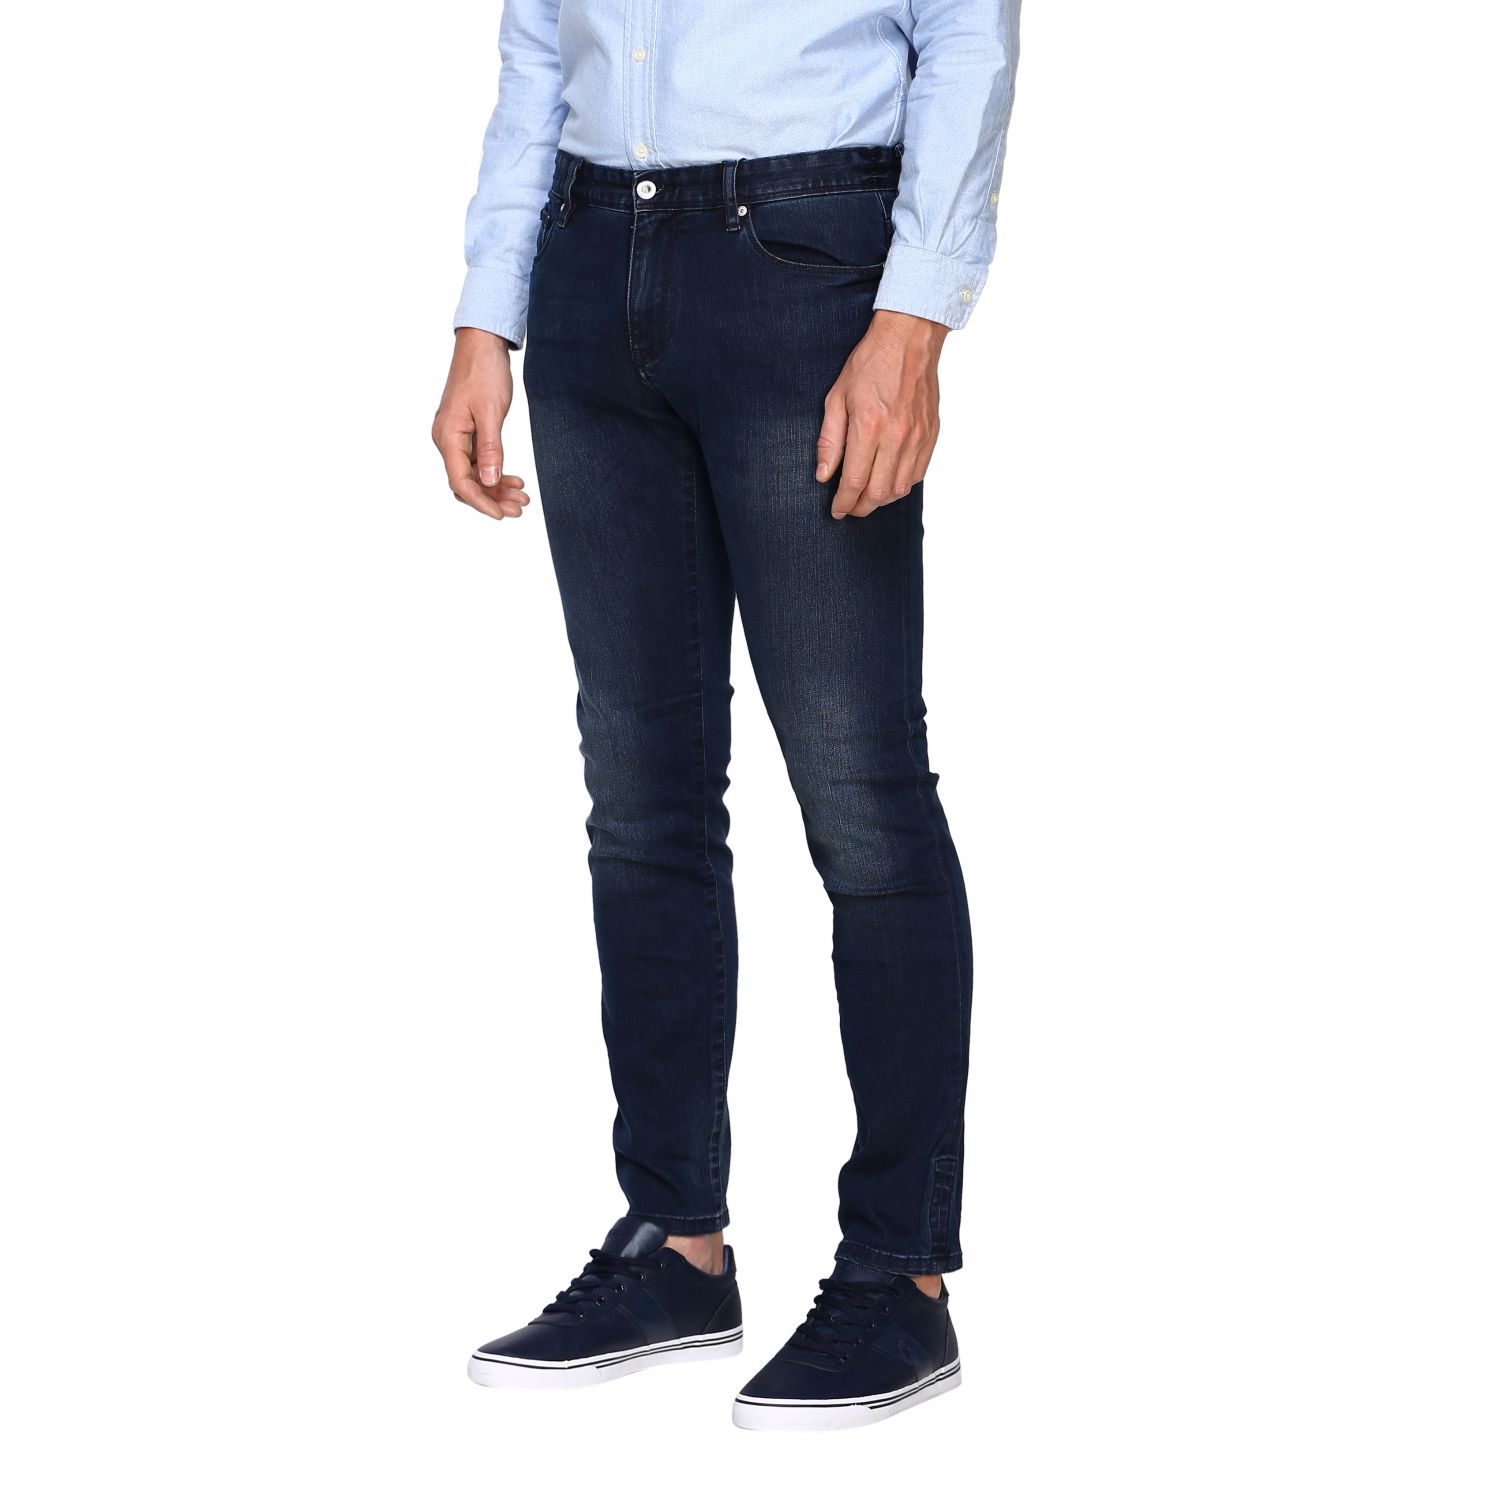 Armani Exchange Outlet: jeans for man - Blue | Armani Exchange jeans 6GZJ14  Z1KWZ online on 